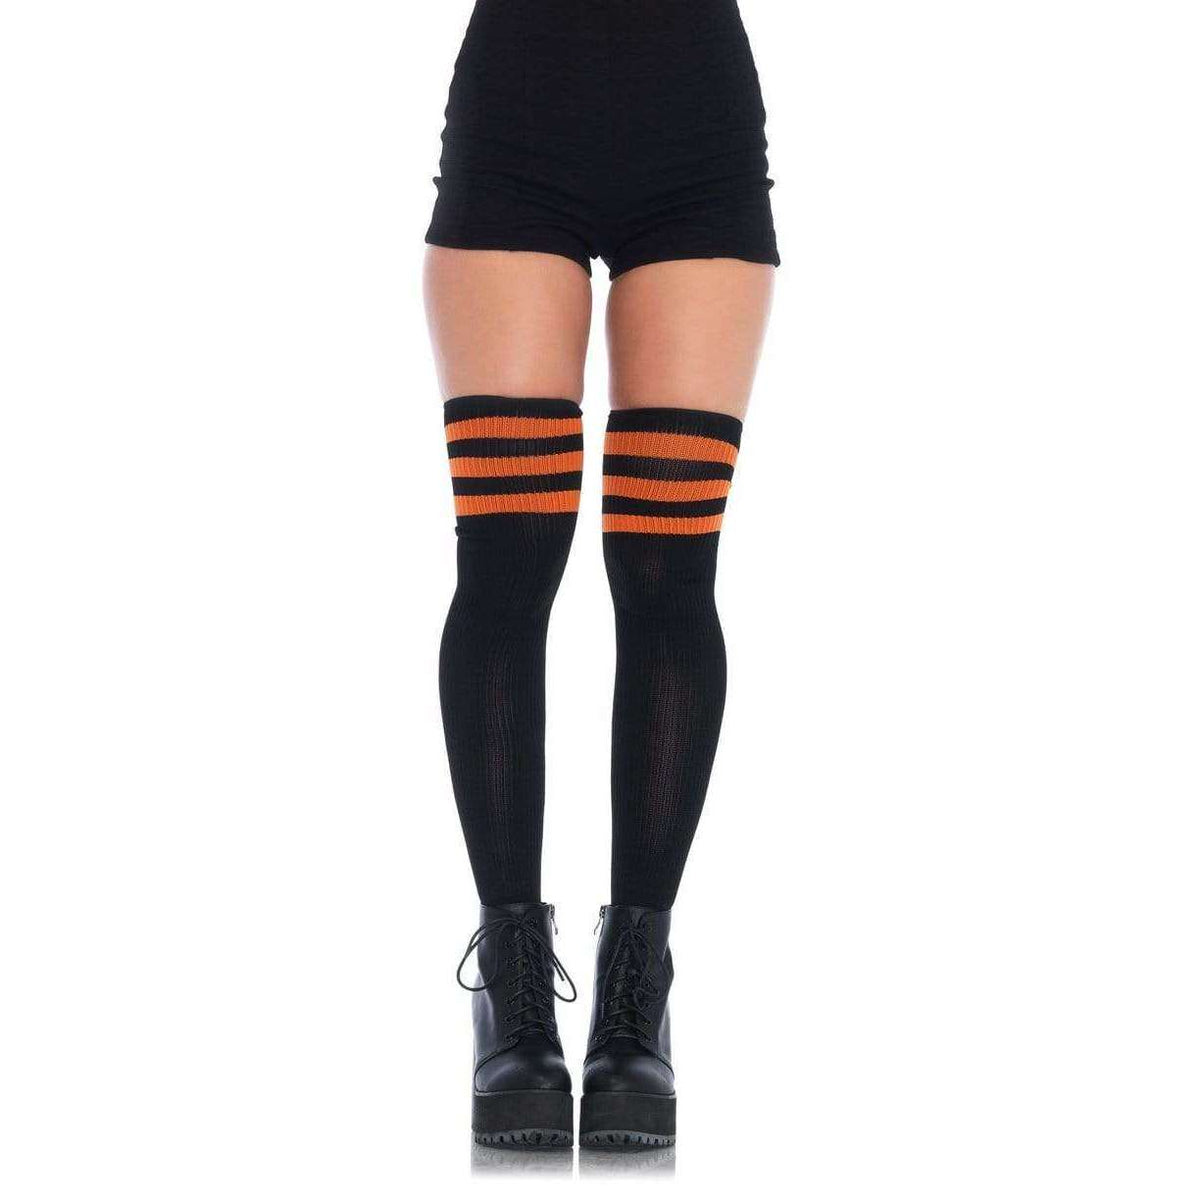 Black & Orange Athletic Thigh High Striped Socks